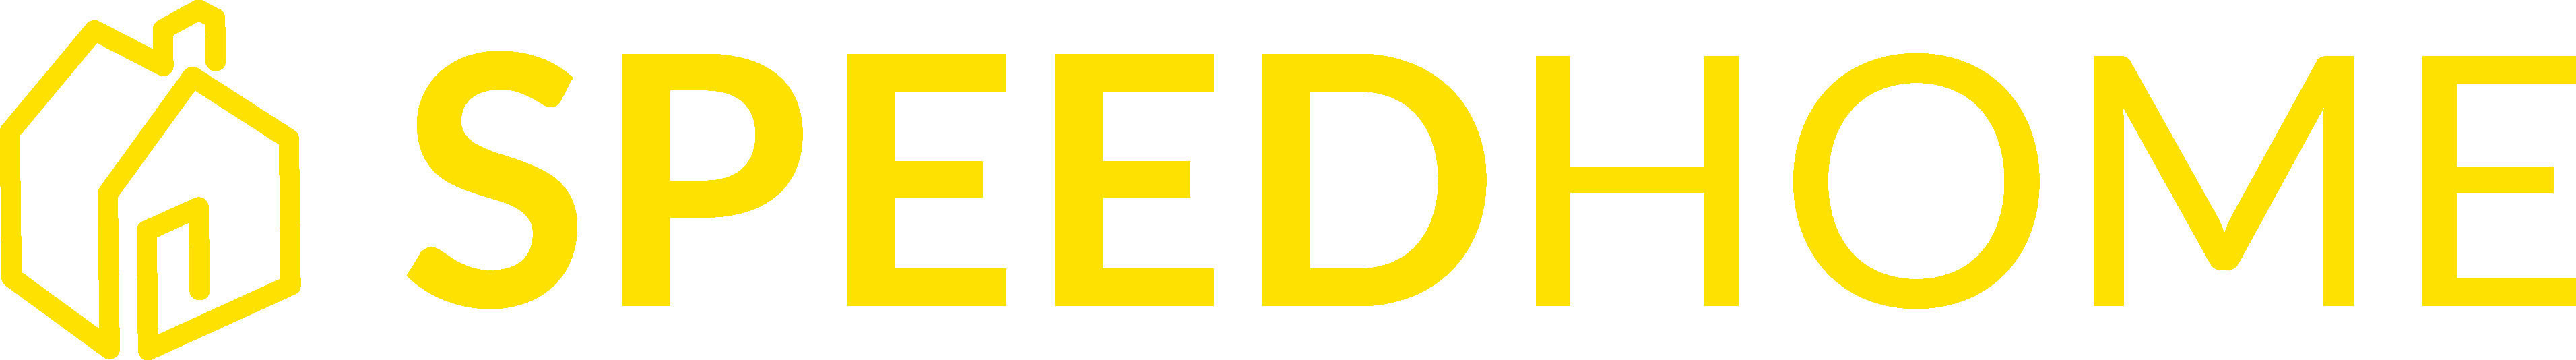 Speedhome logo